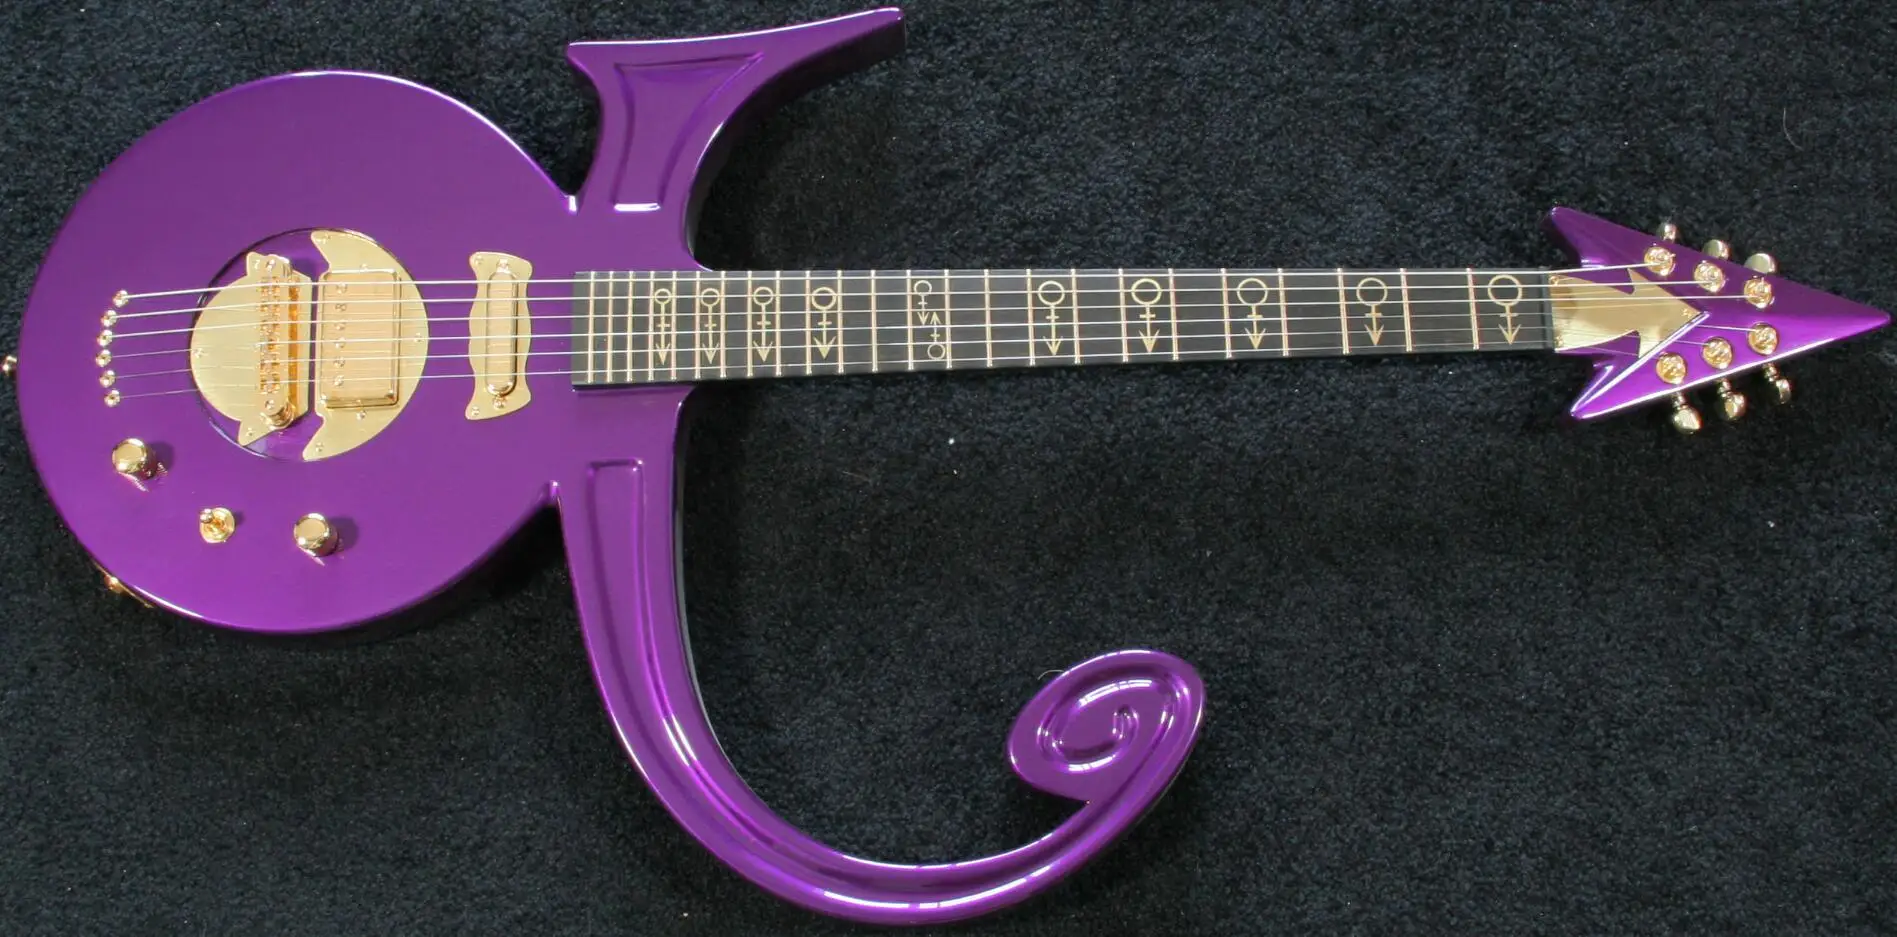 

Rare Shaped Guitar Metallic Purple Rain Prince Symbol Electric Guitar Floyd Rose Tremolo Bridge Gold Hardware Top Selling